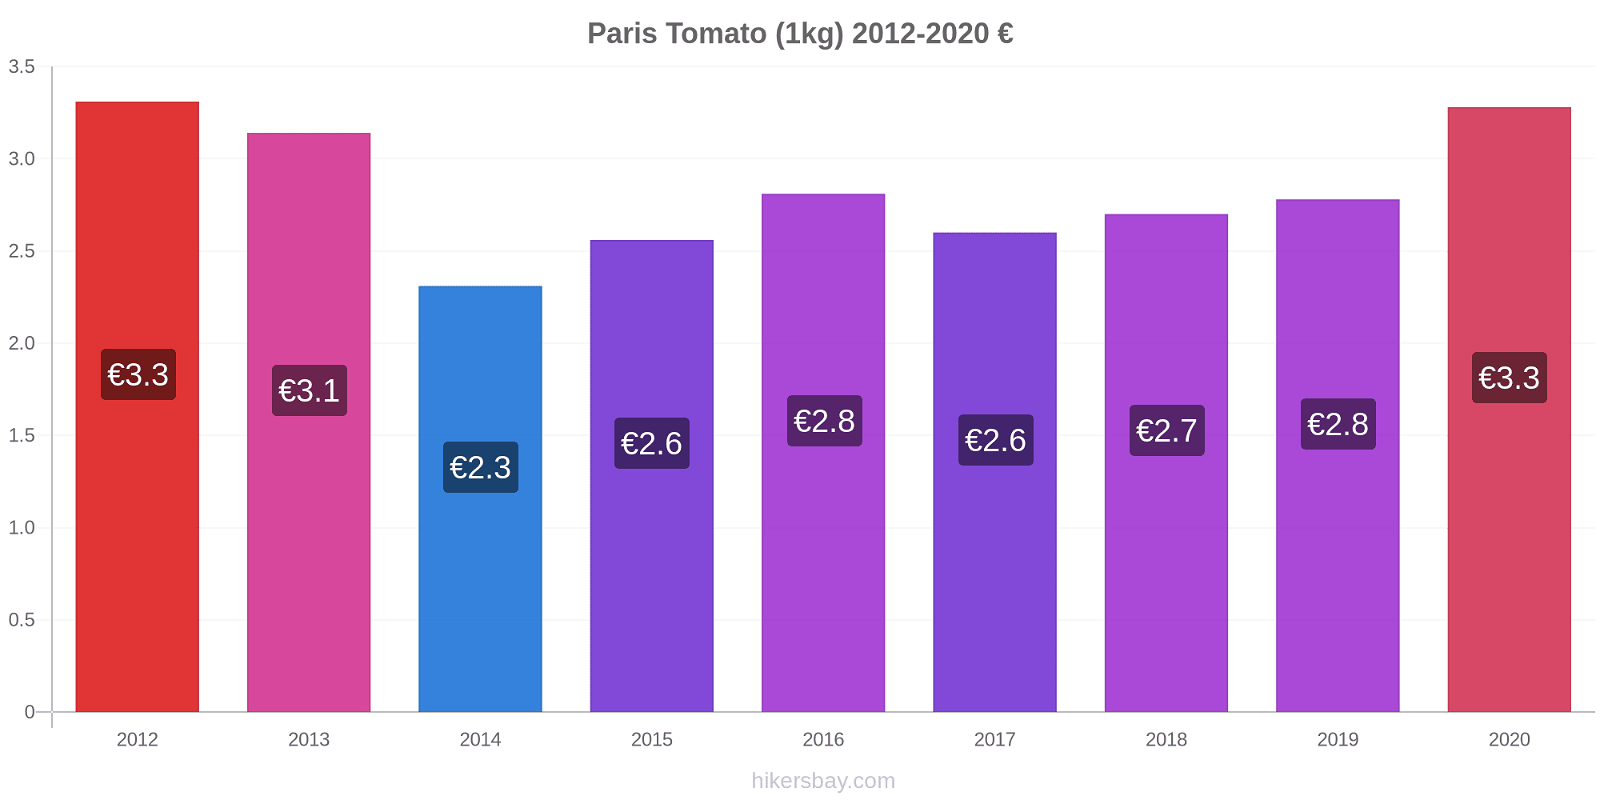 Paris price changes Tomato (1kg) hikersbay.com